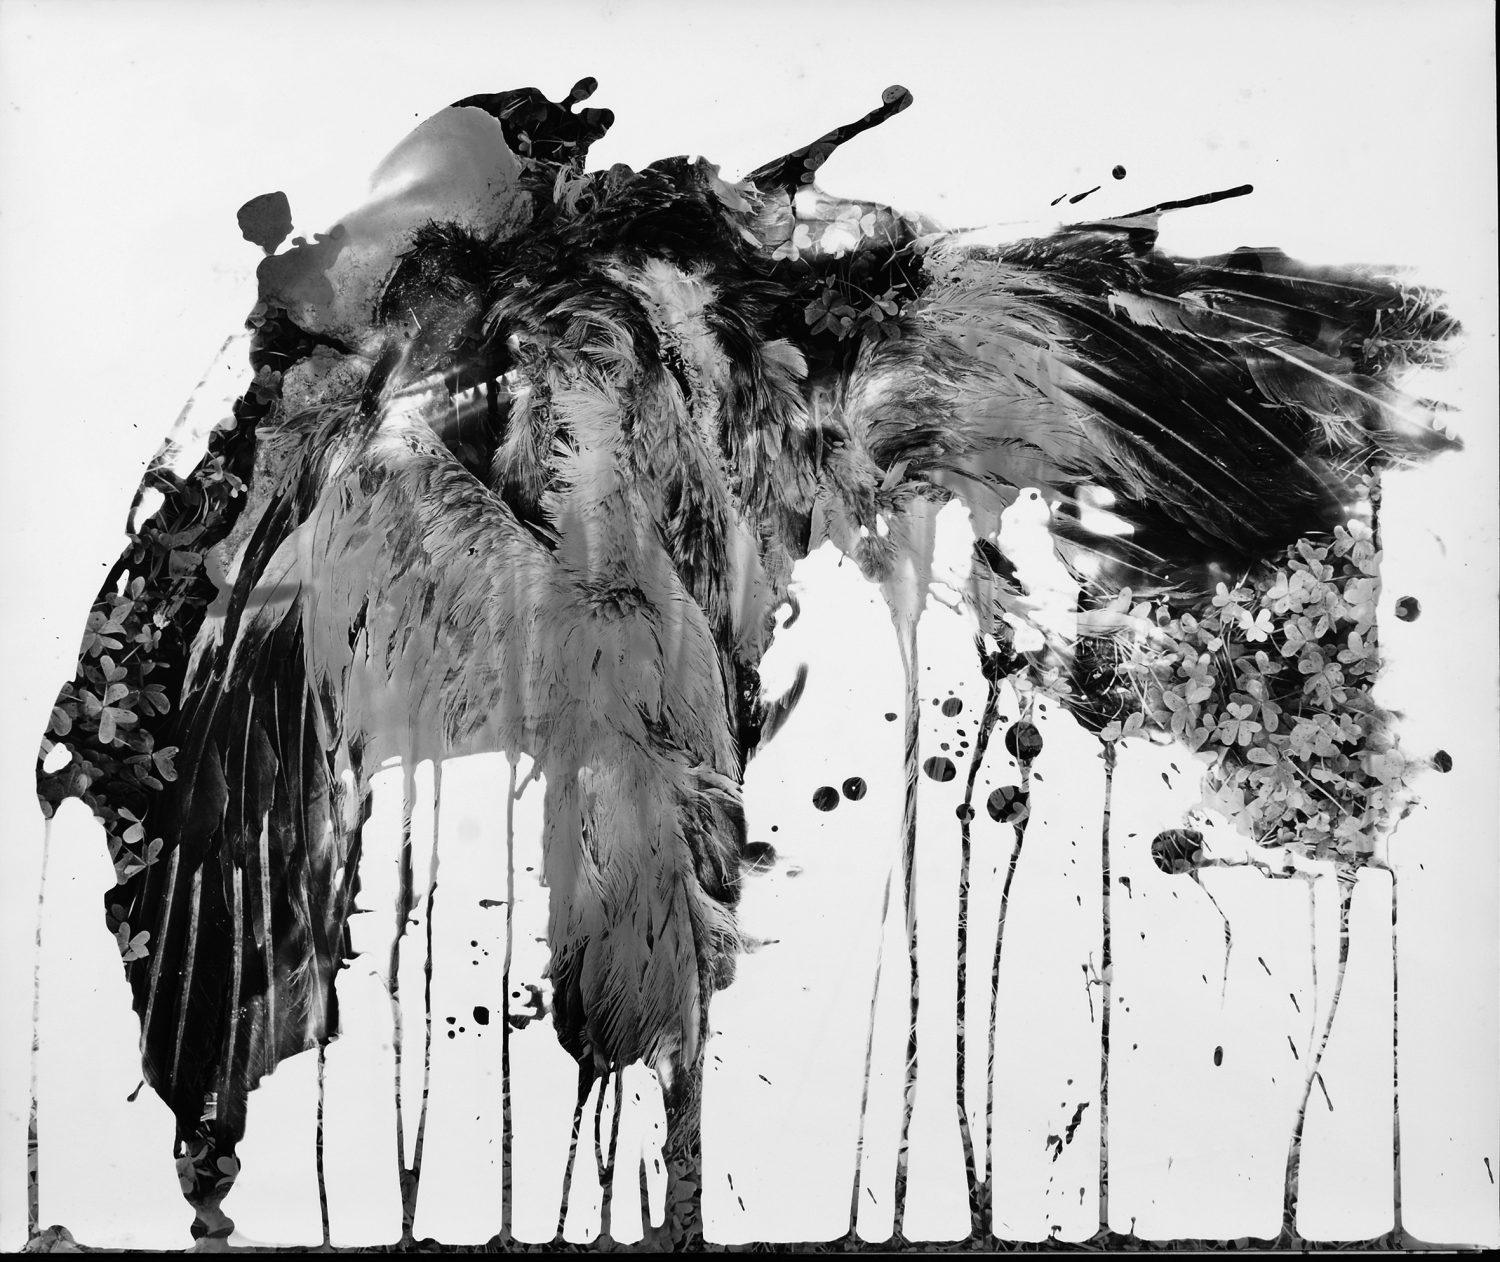 Dead grey heron, 1990 - Altered silver gelatin print.